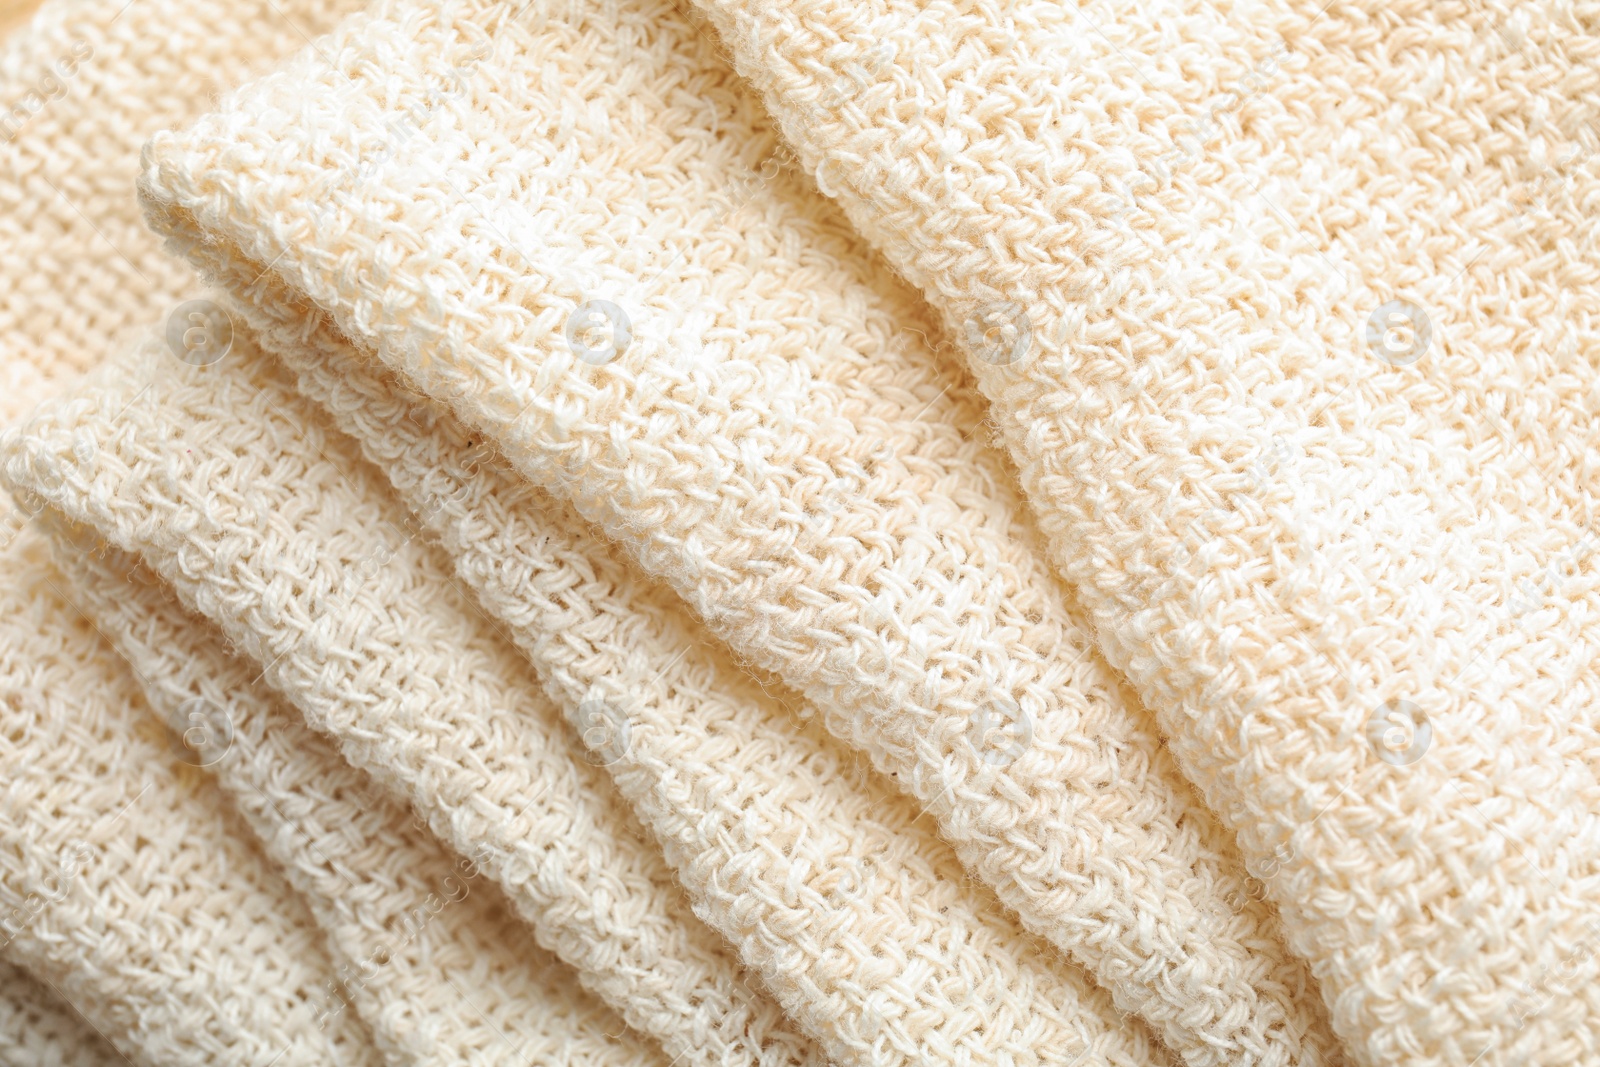 Photo of Closeup view of folded natural hemp cloth. Fabric texture